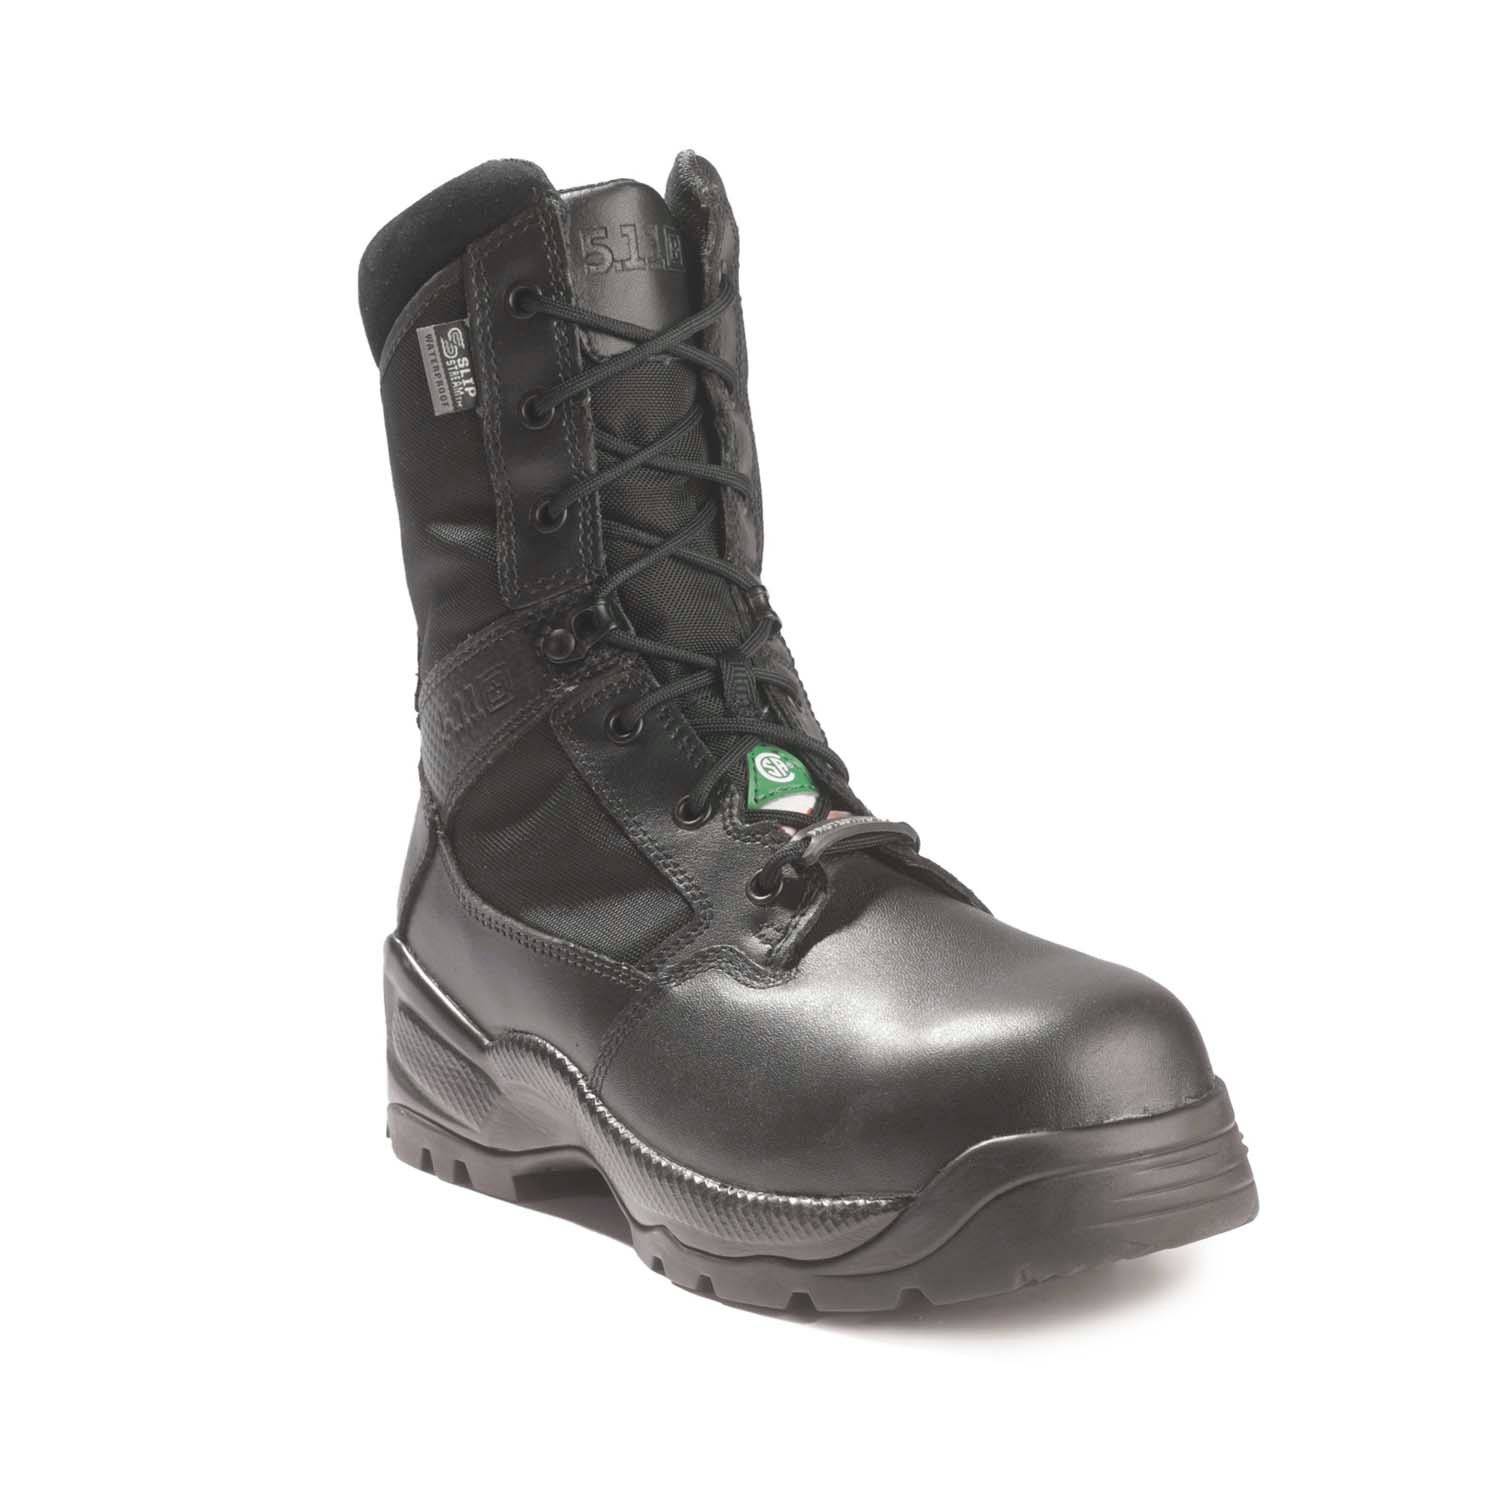 5.11 tactical steel toe boots